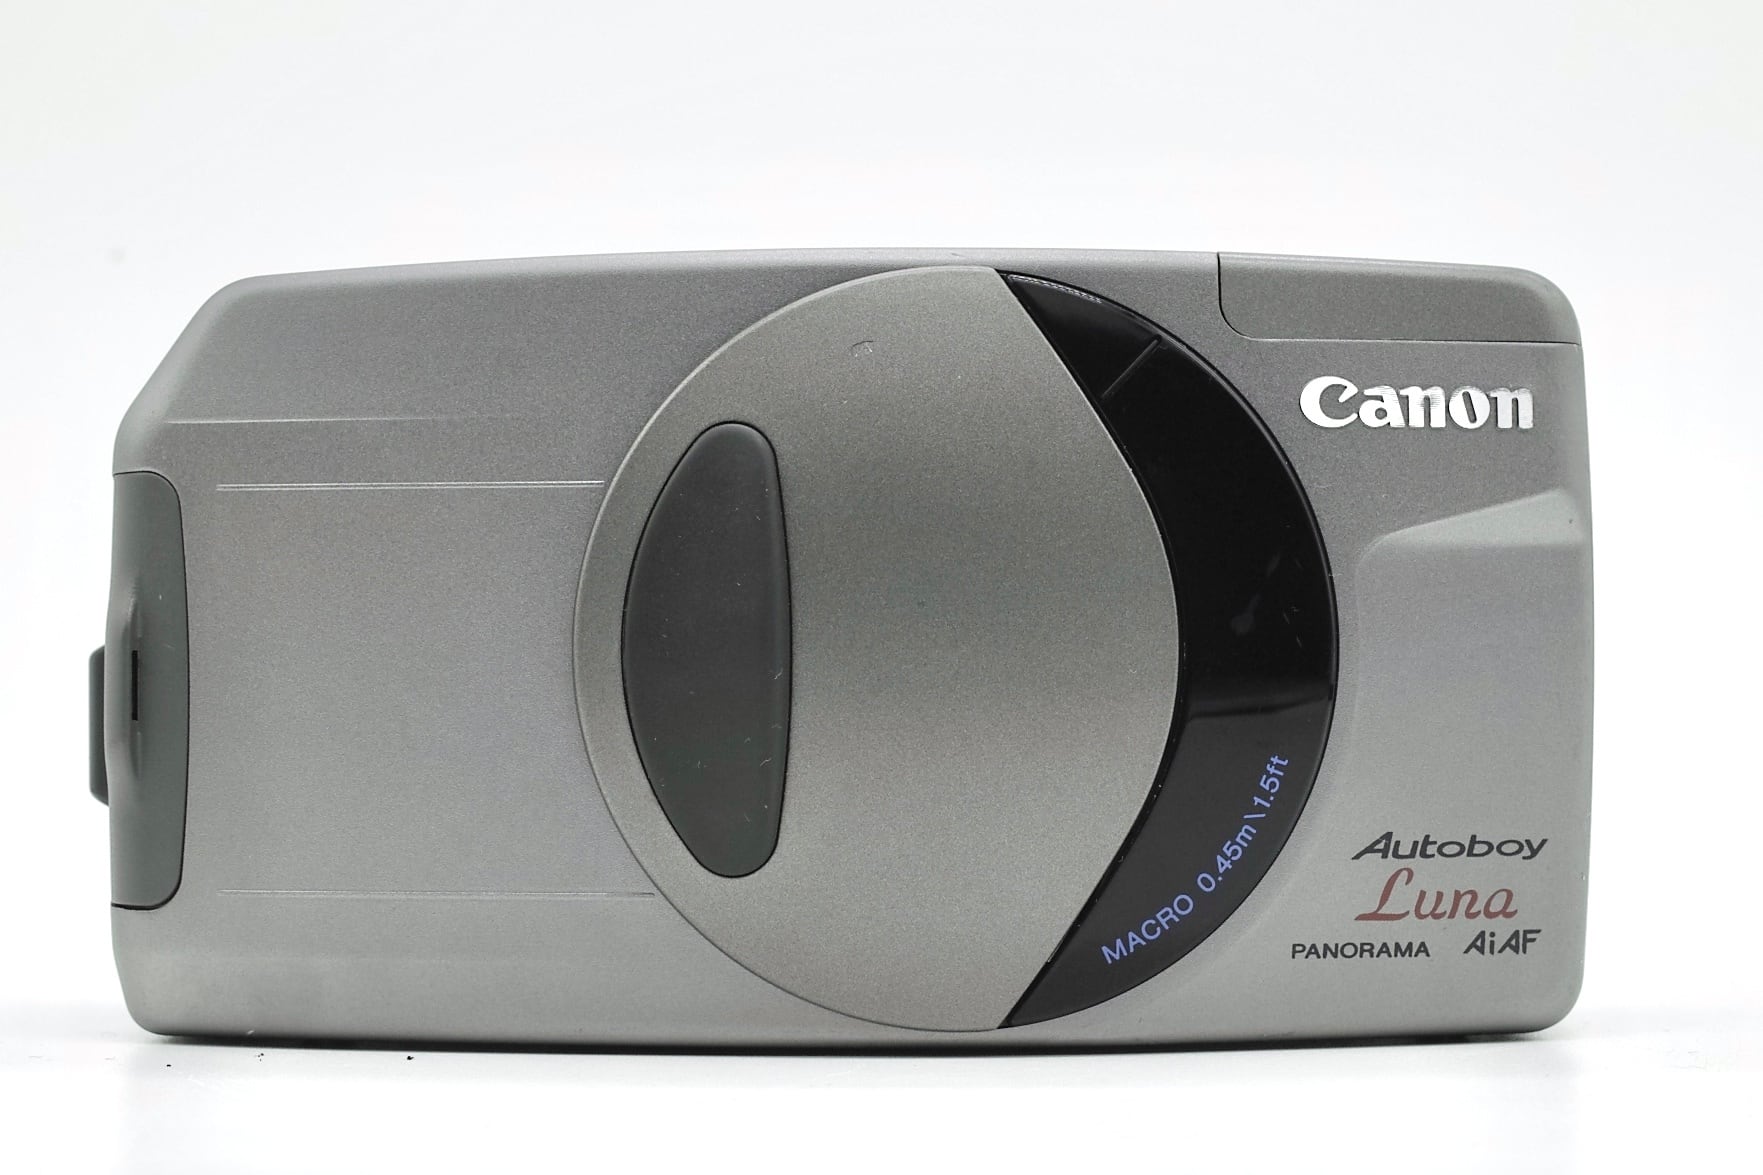 Canon Autoboy Luna | ヨアケマエカメラ